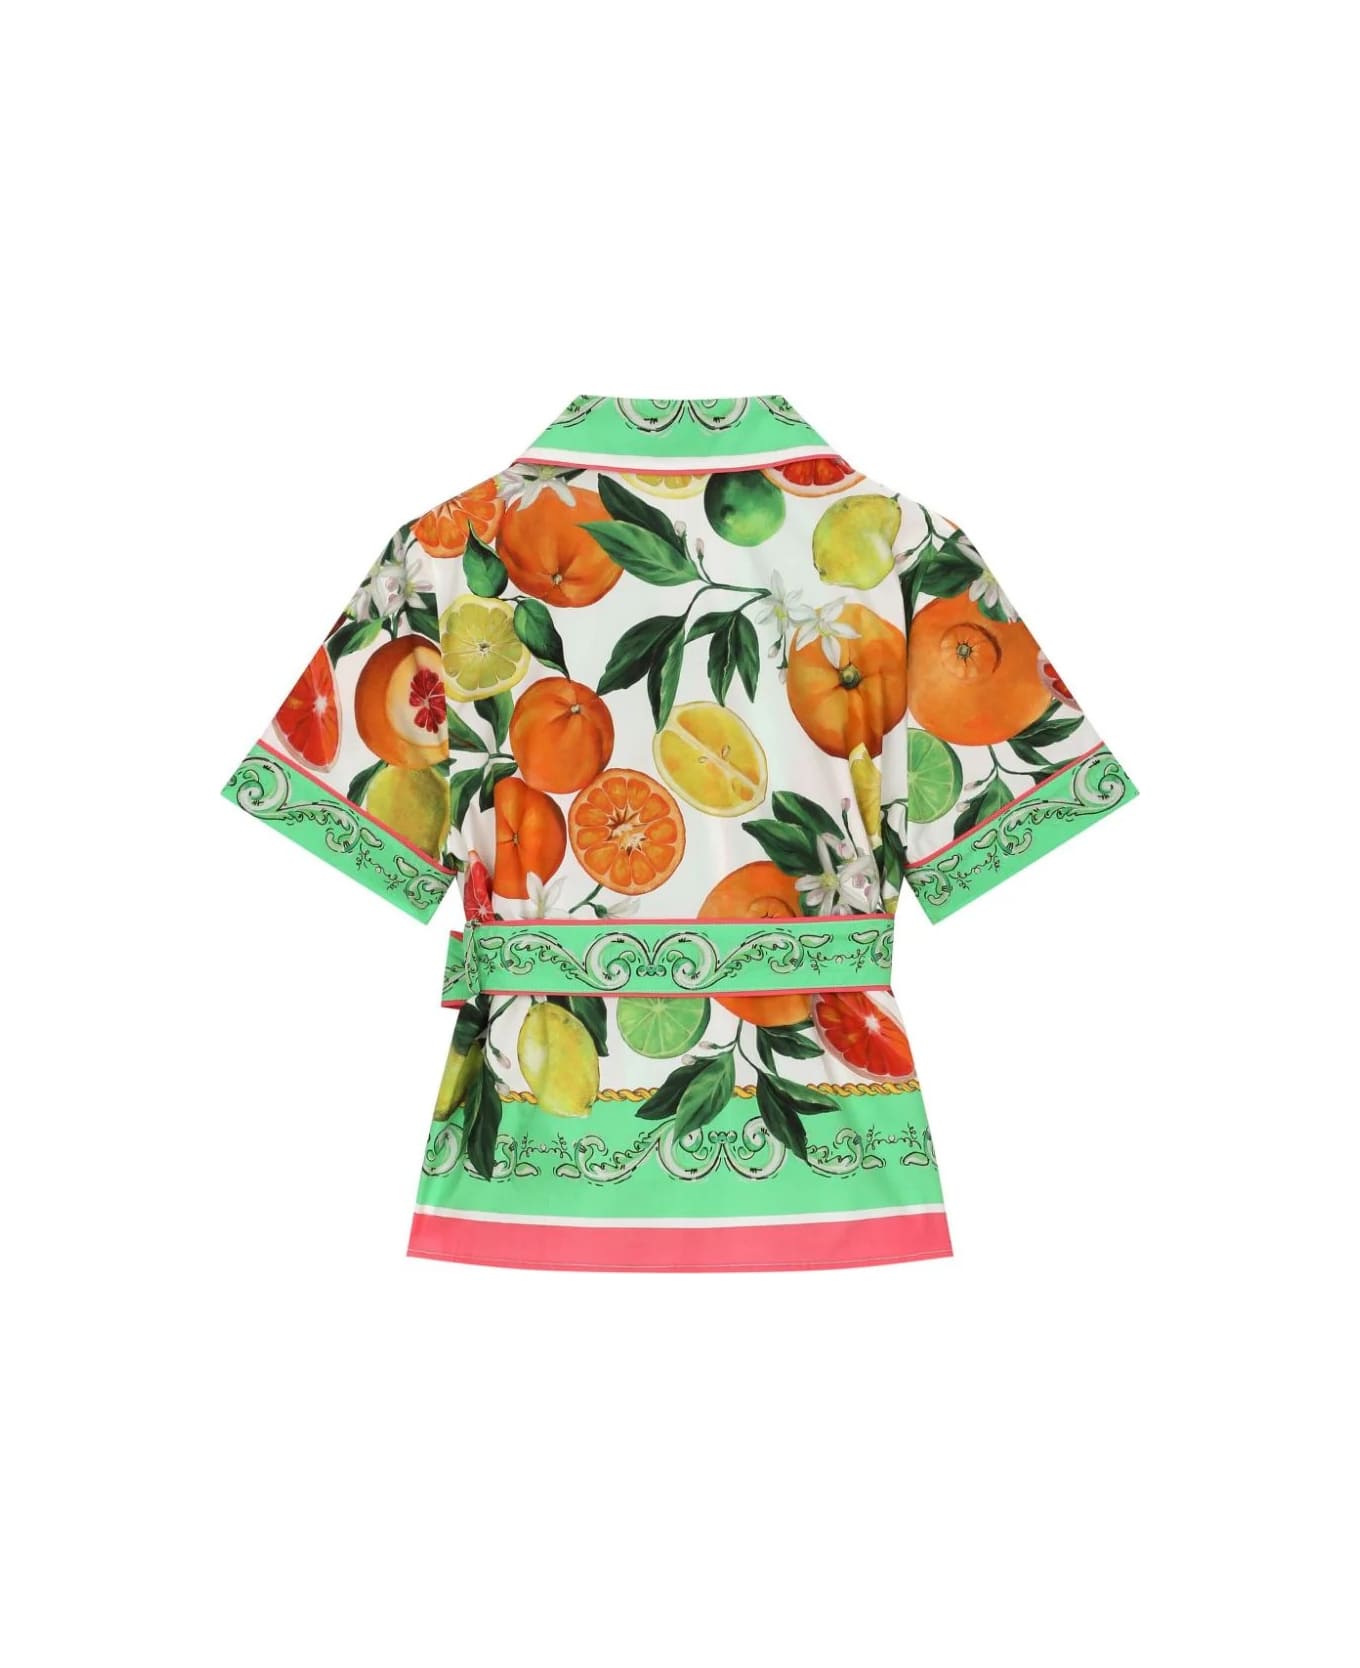 Dolce & Gabbana Shirt With Belt And Orange And Lemon Print - An Arance Limoni シャツ